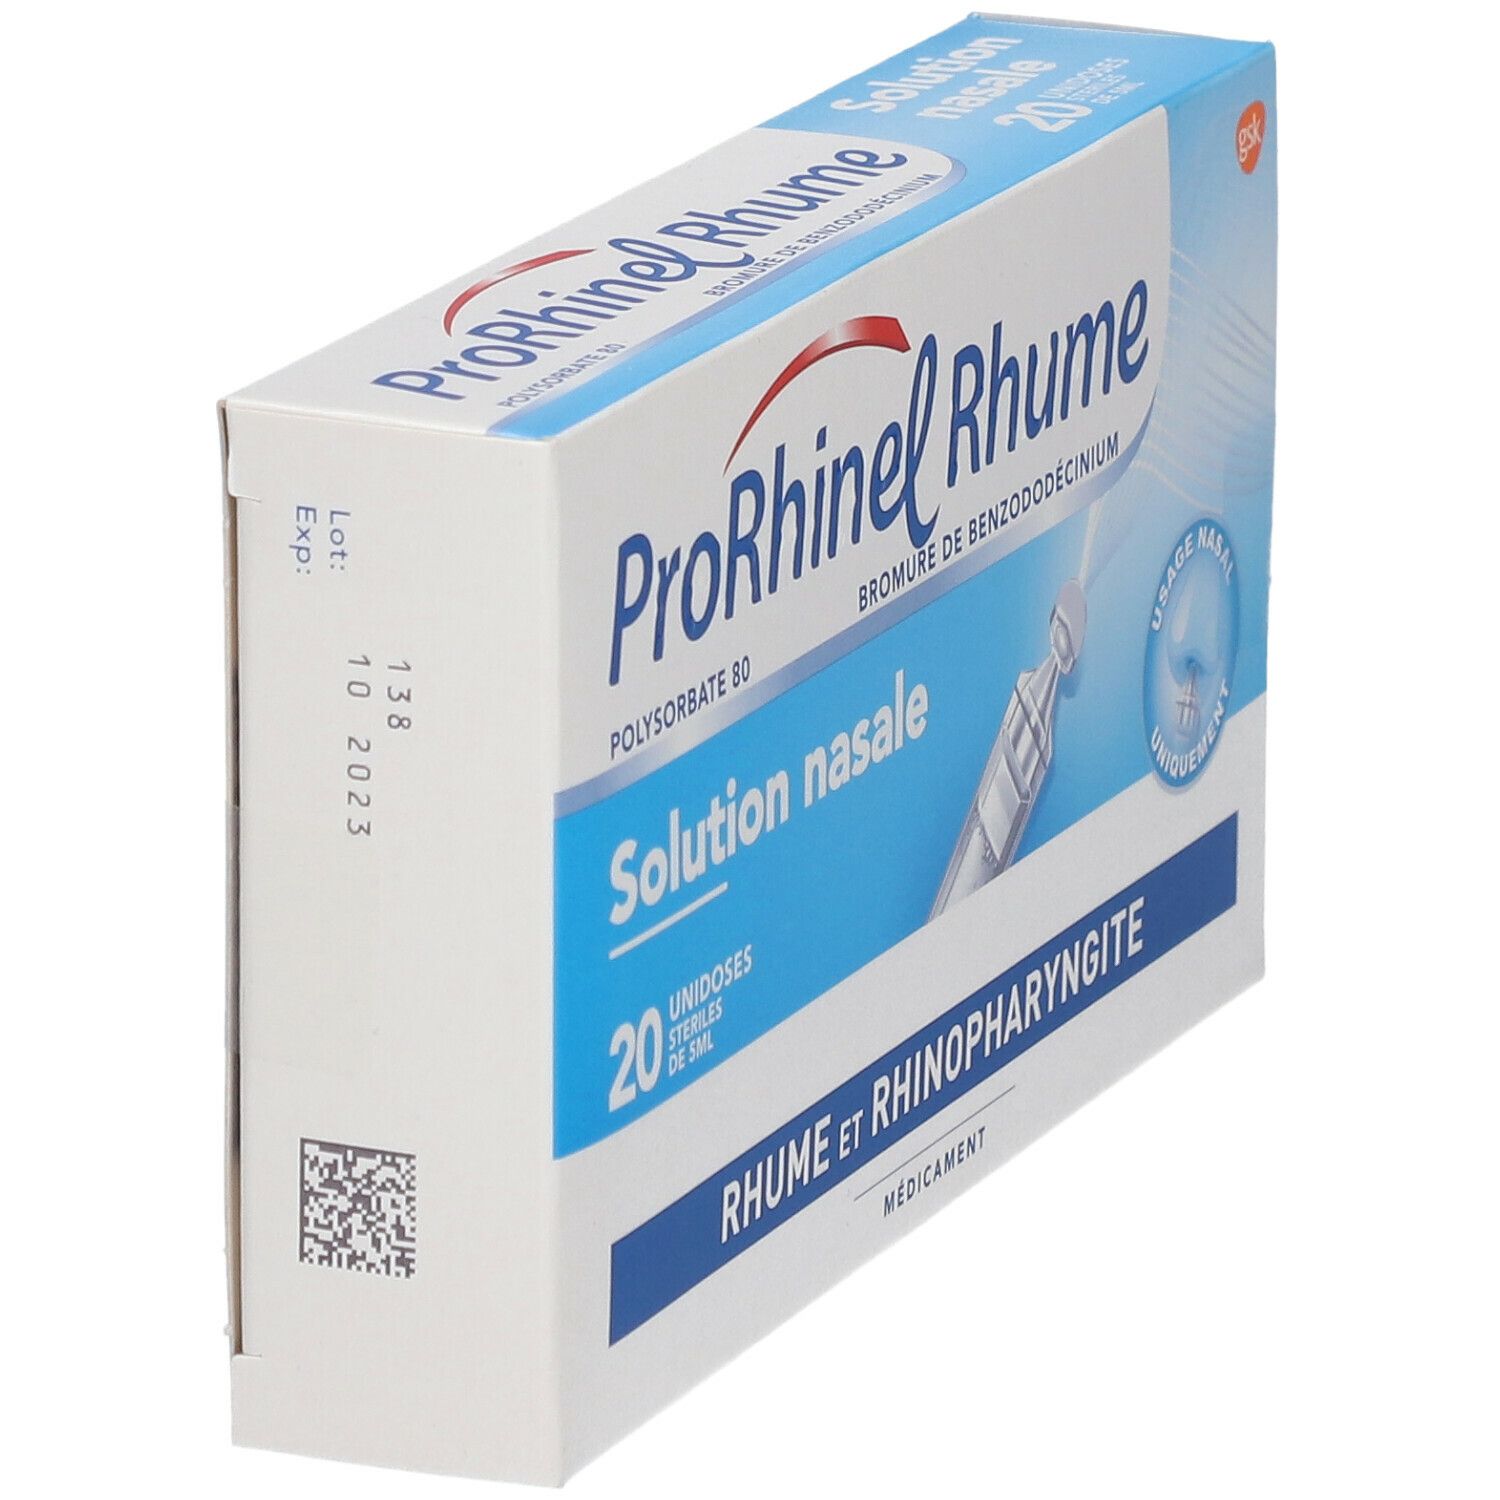 Shopmium  ProRhinel - Rhume de bébé